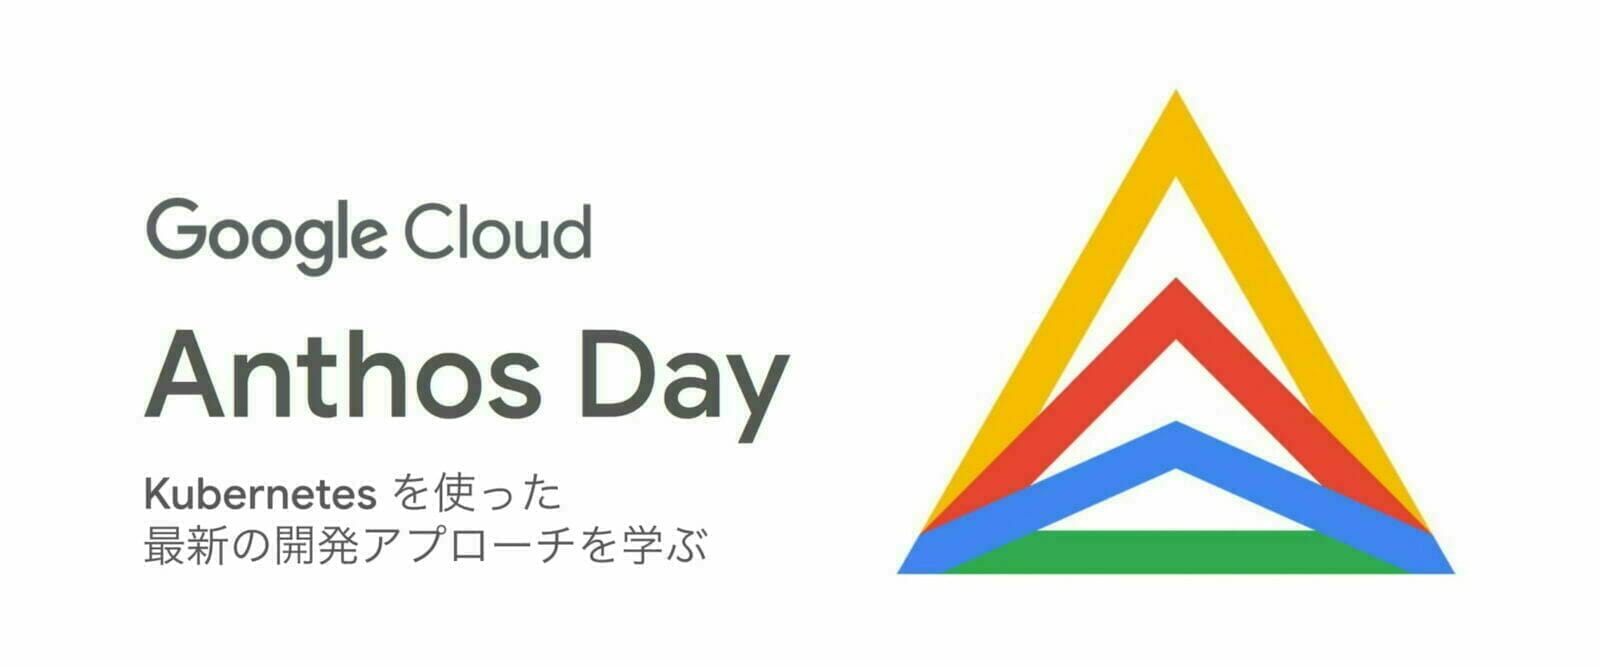 Google Cloud Anthos Day